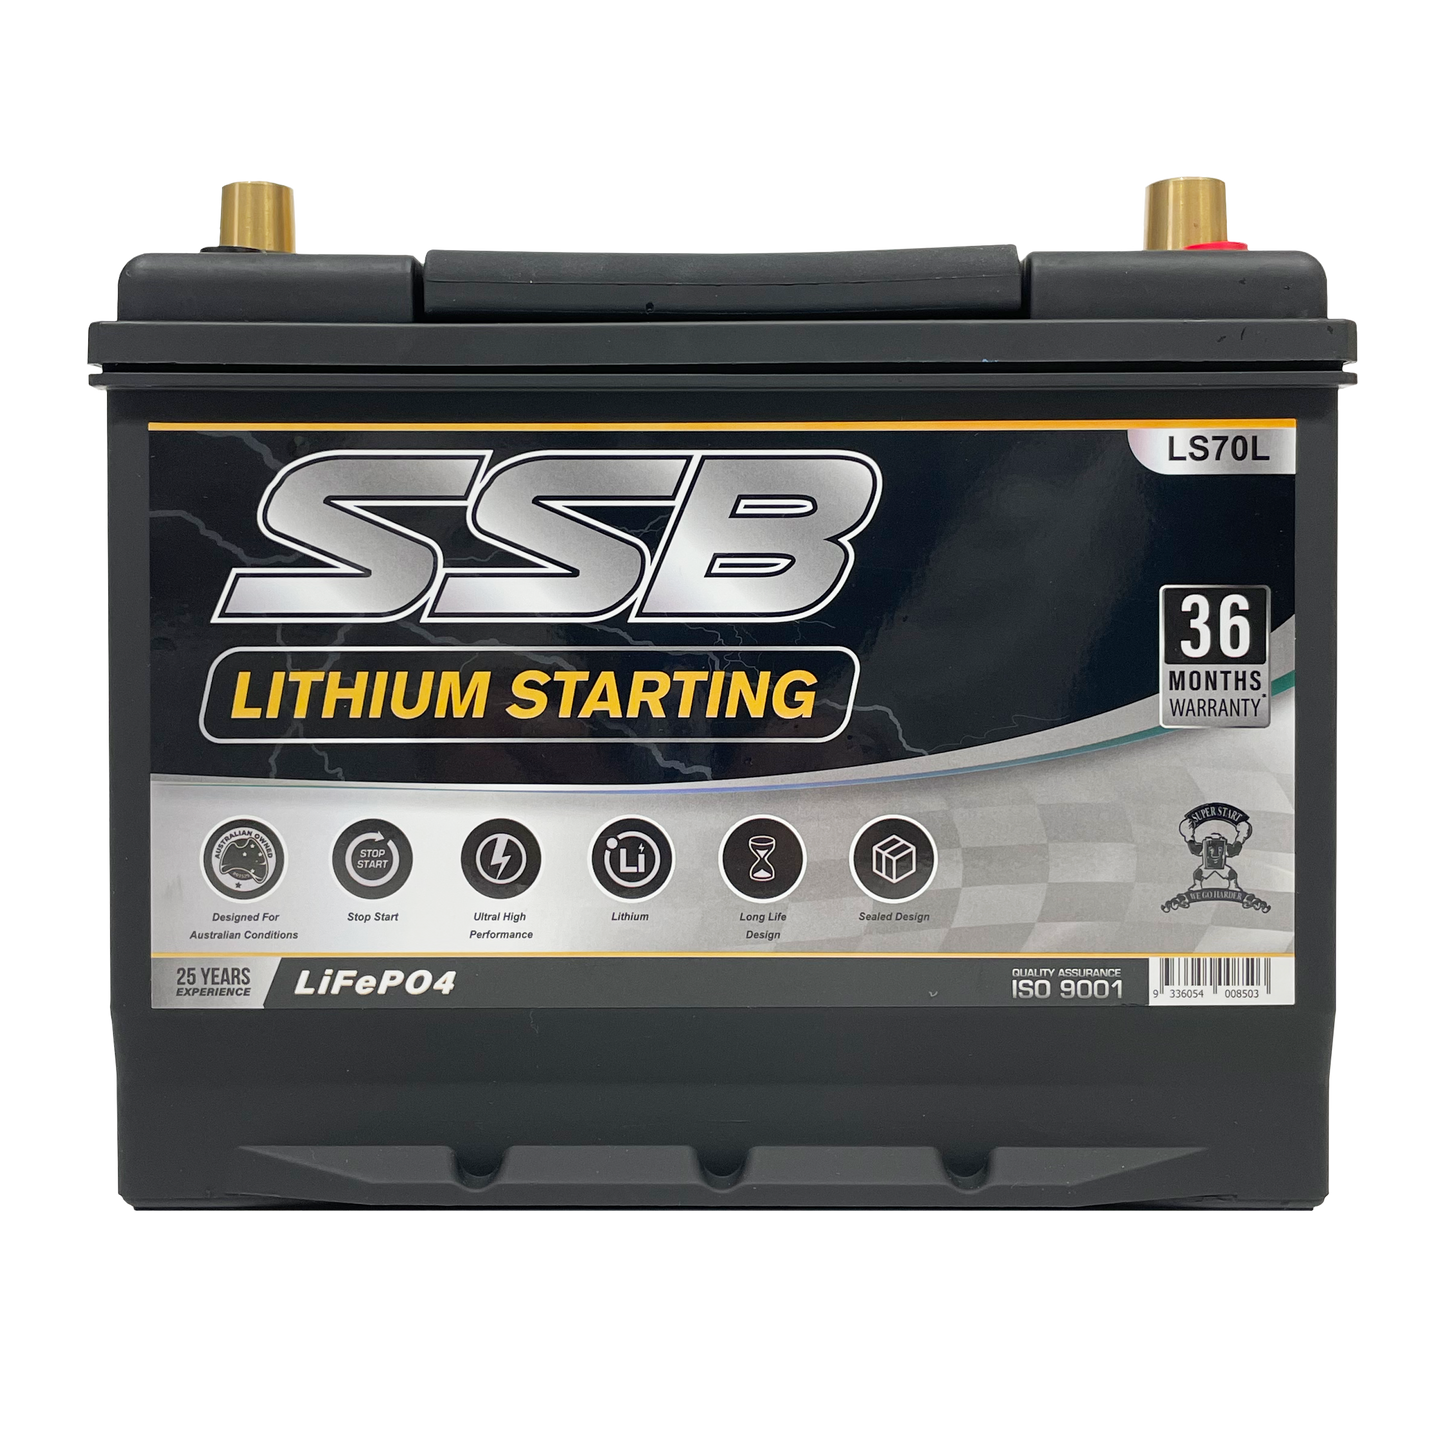 SSB LS70L 12v 60Ah 1400CCA Lithium Starting Battery